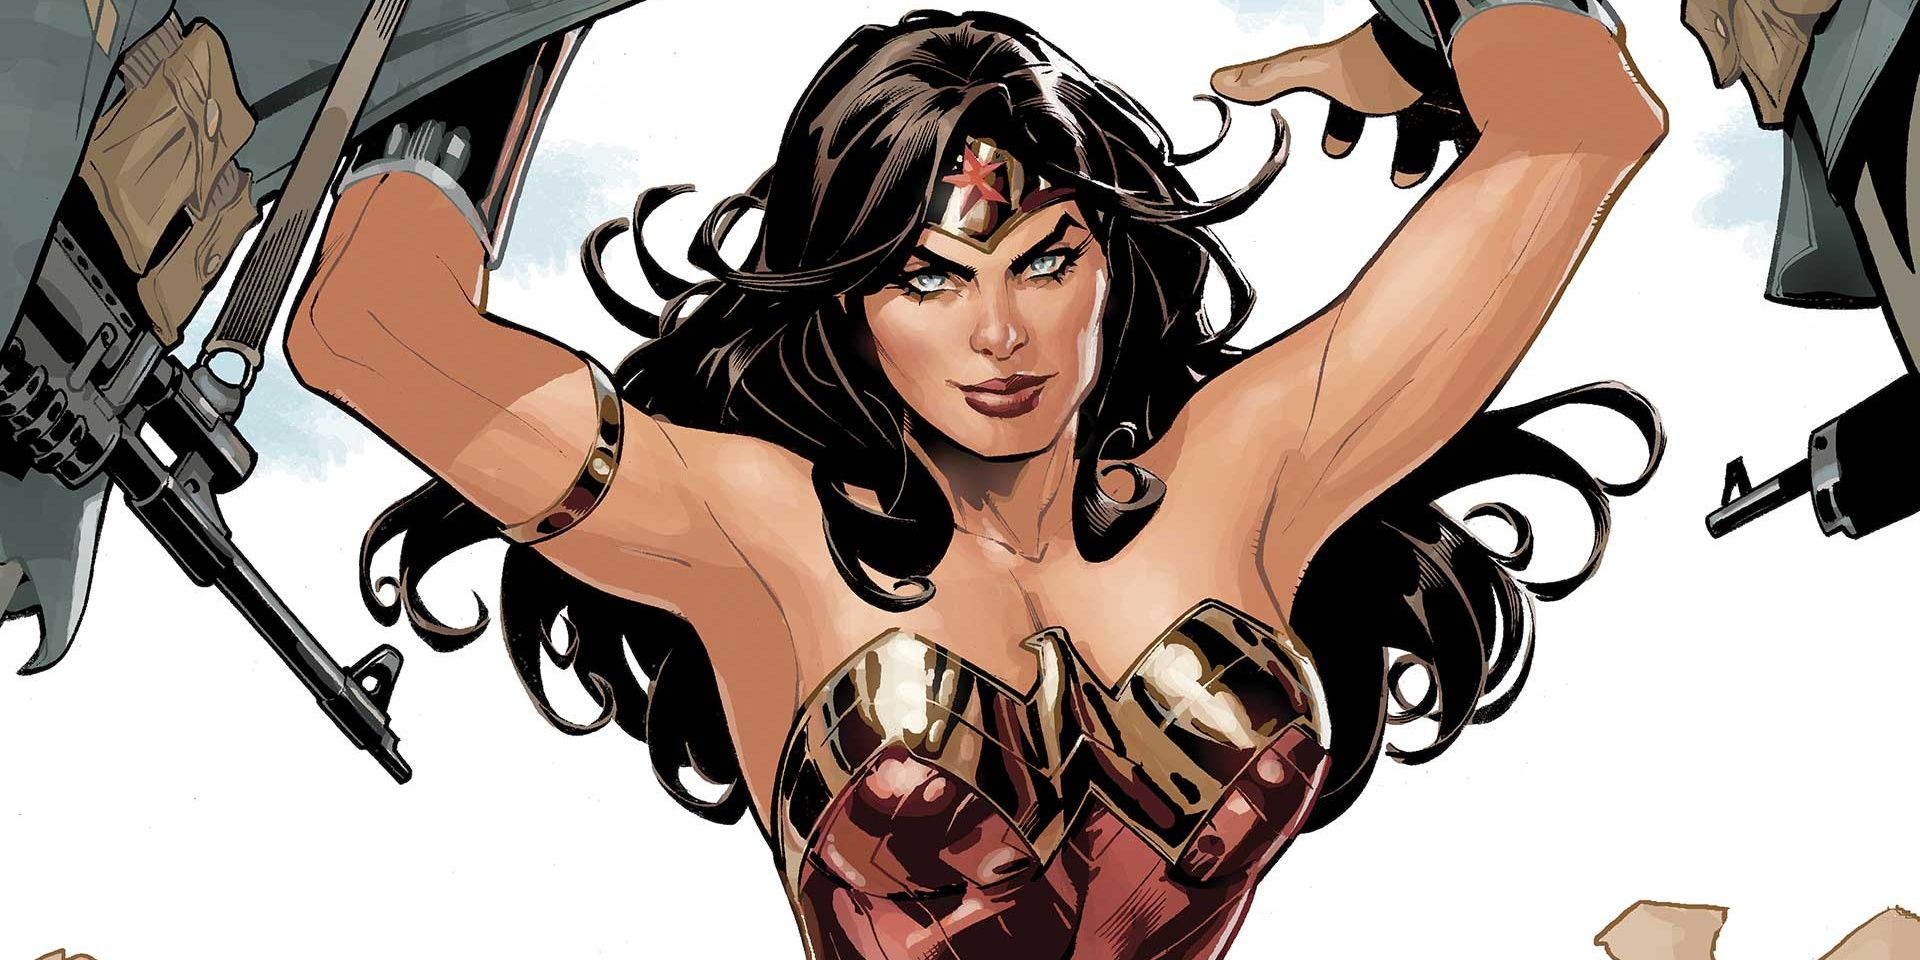 Wonder Woman lifts criminals above her head